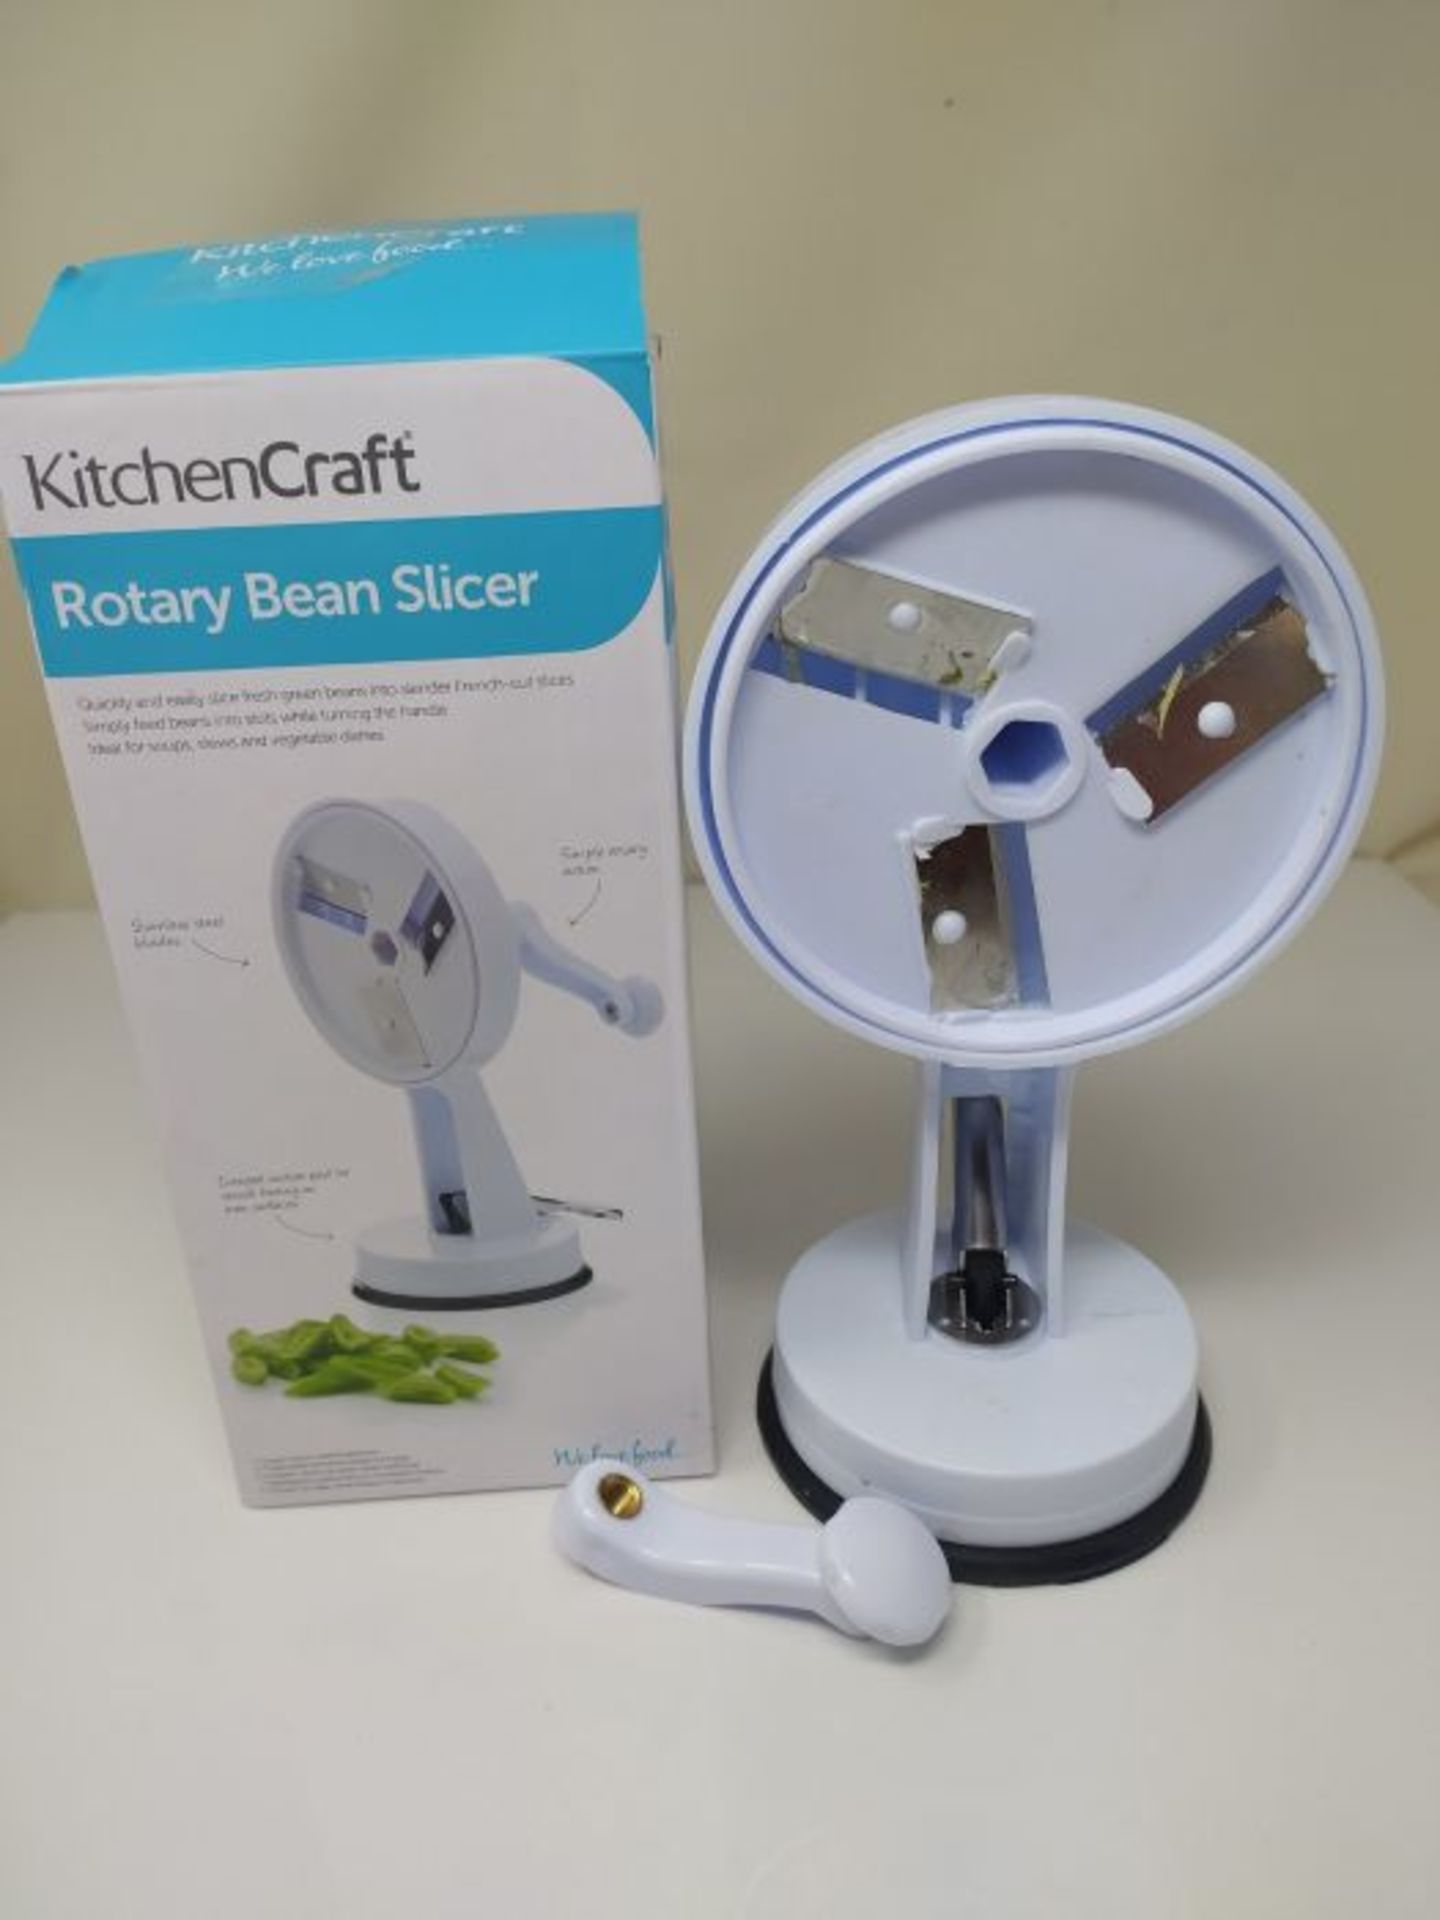 KitchenCraft KCBEANAUTO Rotary Runner Bean Slicer with Suction Pad in Gift Box, Plasti - Image 2 of 2